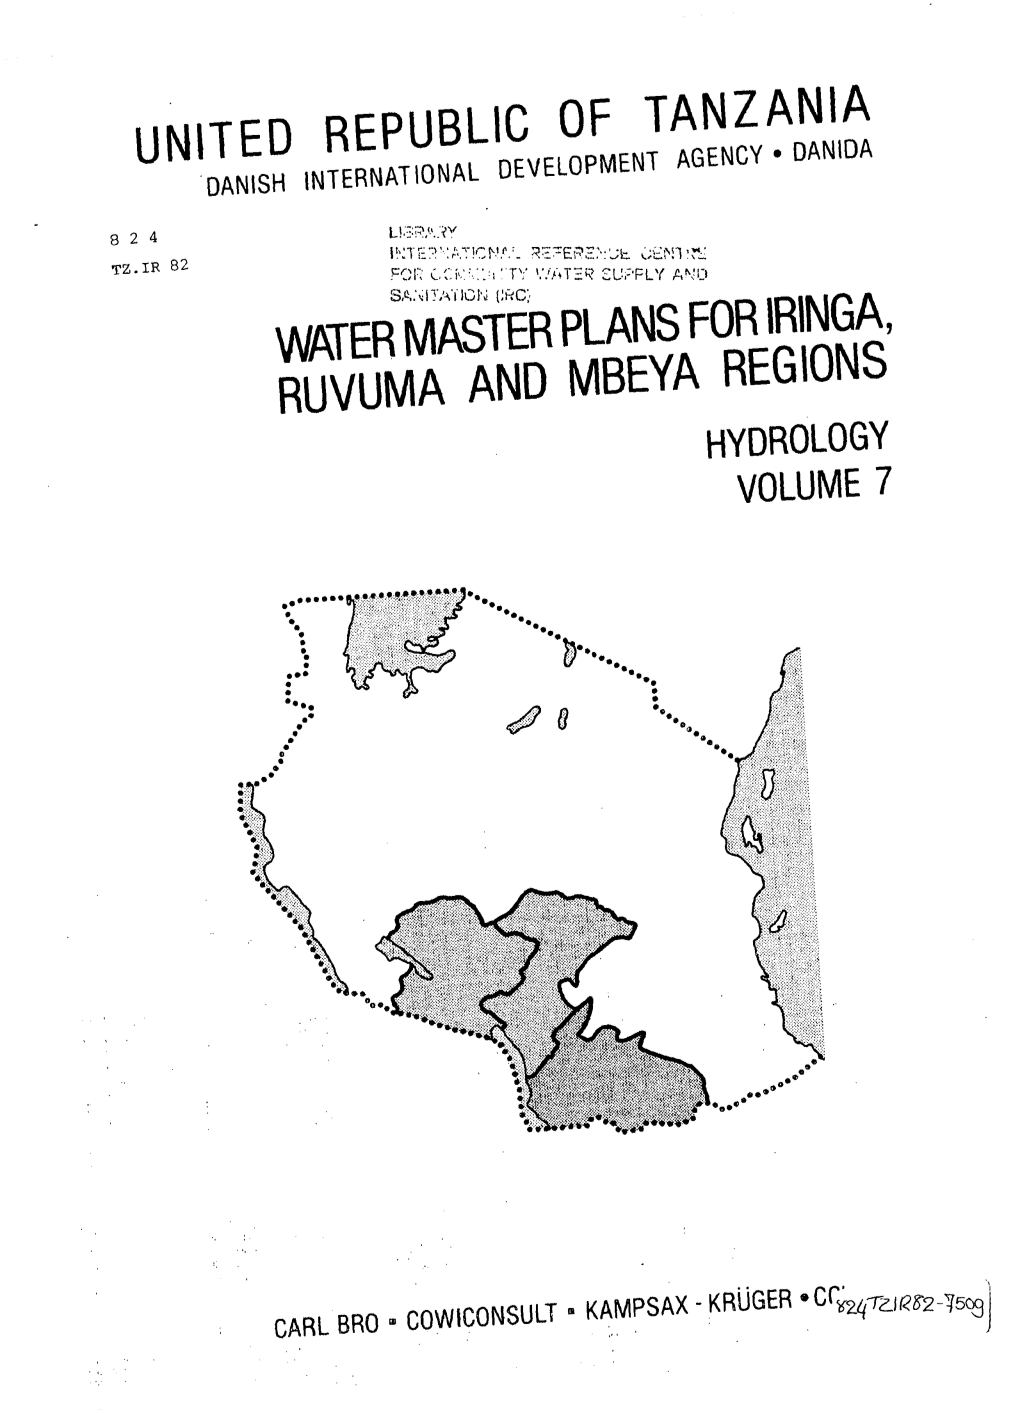 Watermaster Plansrfiringa, Ruvuma and Mbeya Regions Hydrology Volume 7